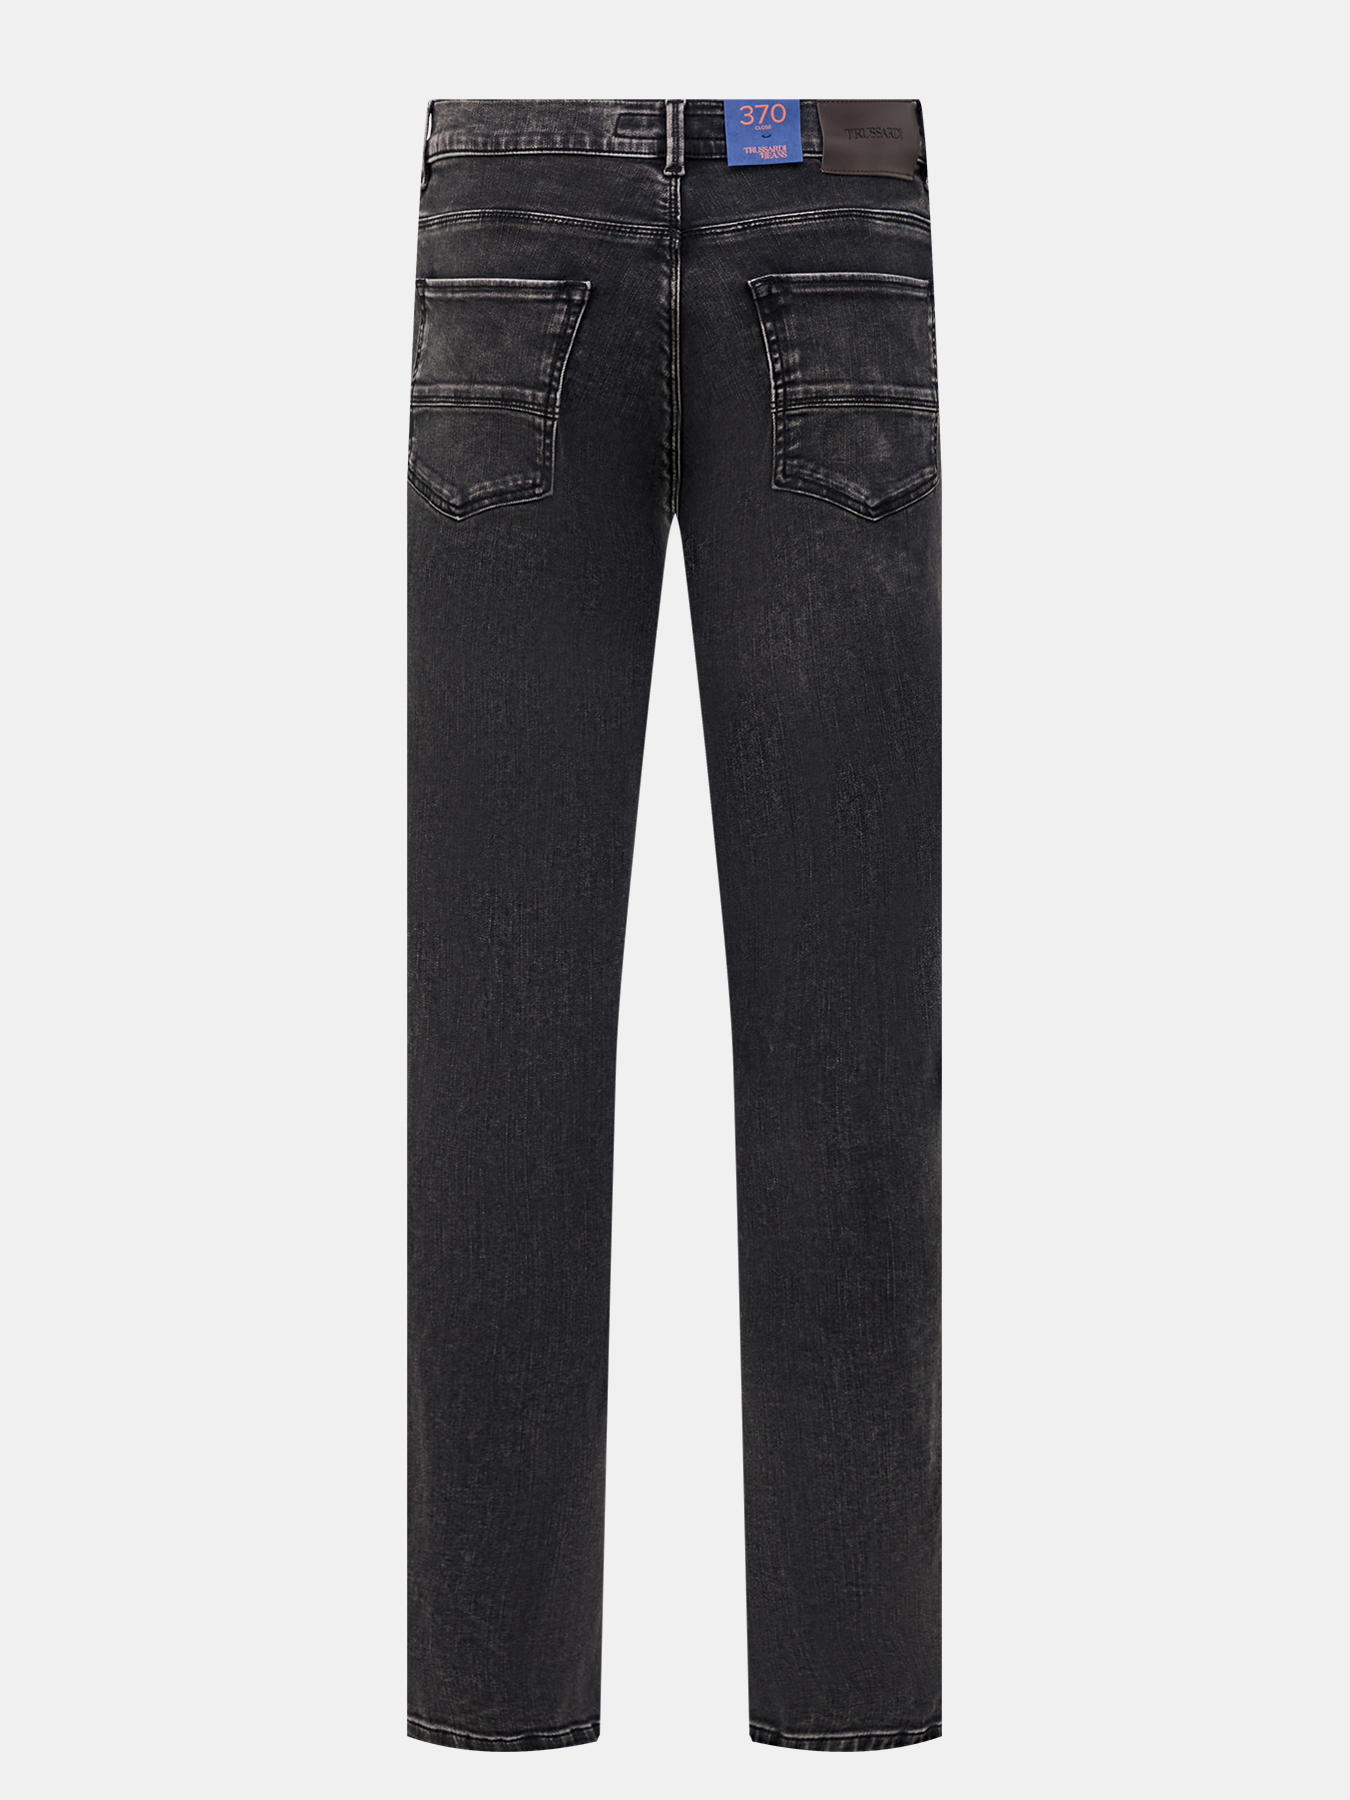 Trussardi Jeans. Купить джинсы Trussardi Riviera мужские. Mixed jeans